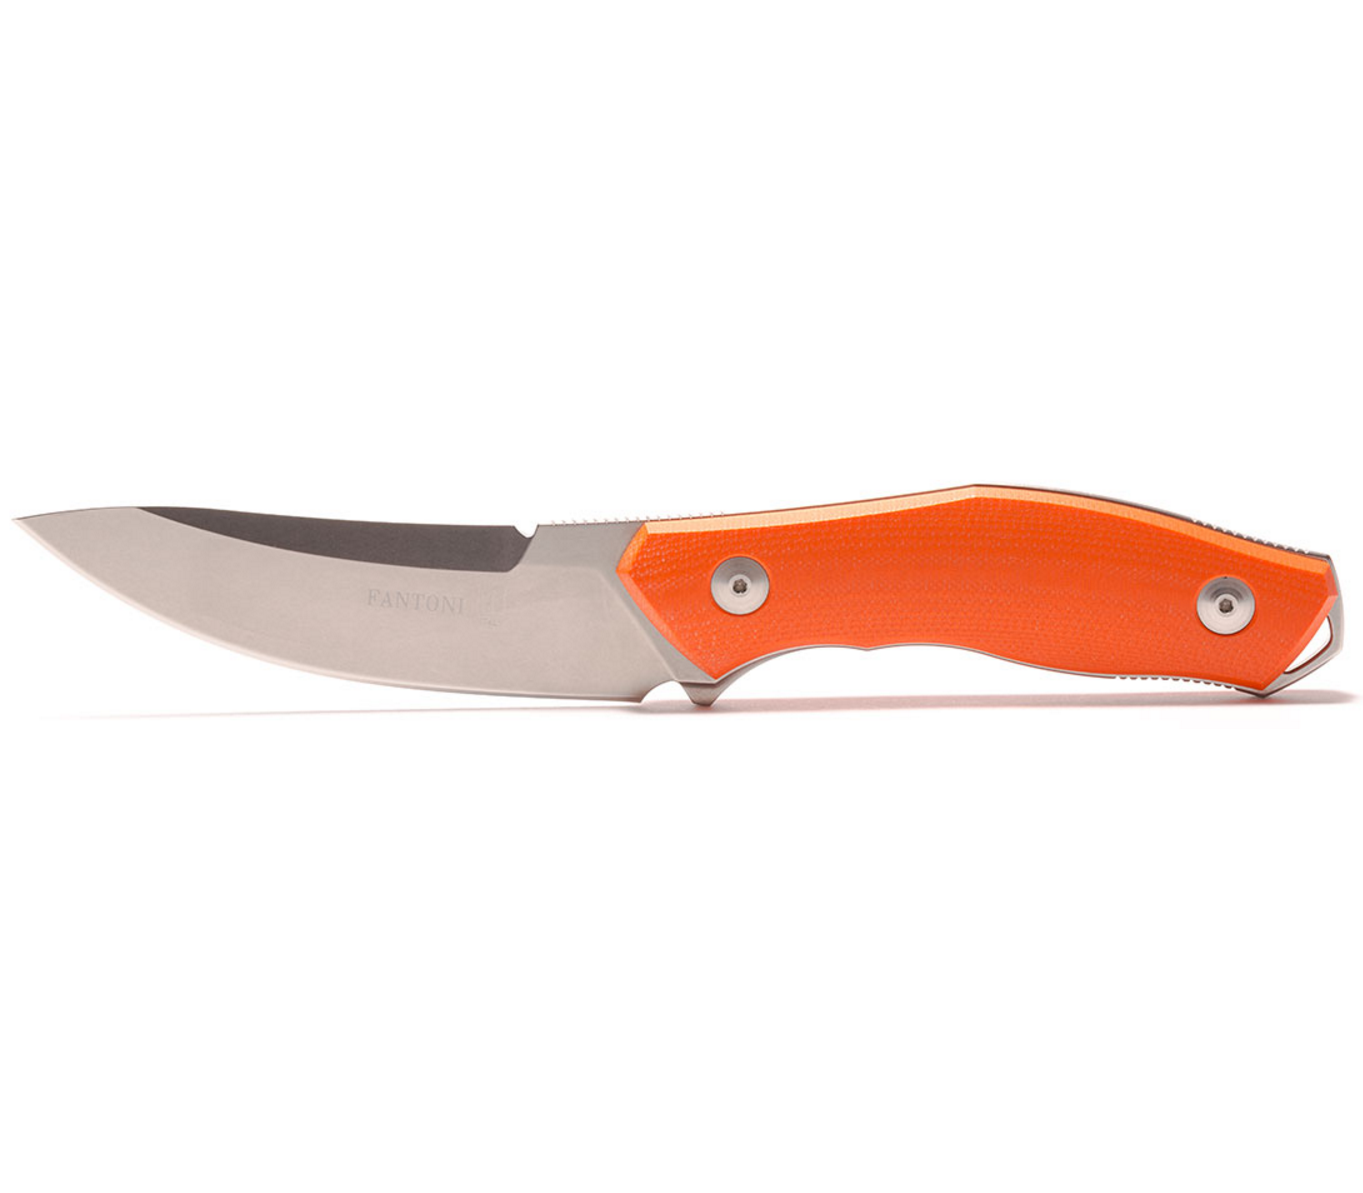 Нож с фиксированным клинком C.U.T. Fixed, Orange G-10 Scales, Stonewashed CPM® S30V™, Dmitry Sinkevich (SiDiS) Design, Kydex Sheath 10.6 см. - фото 2